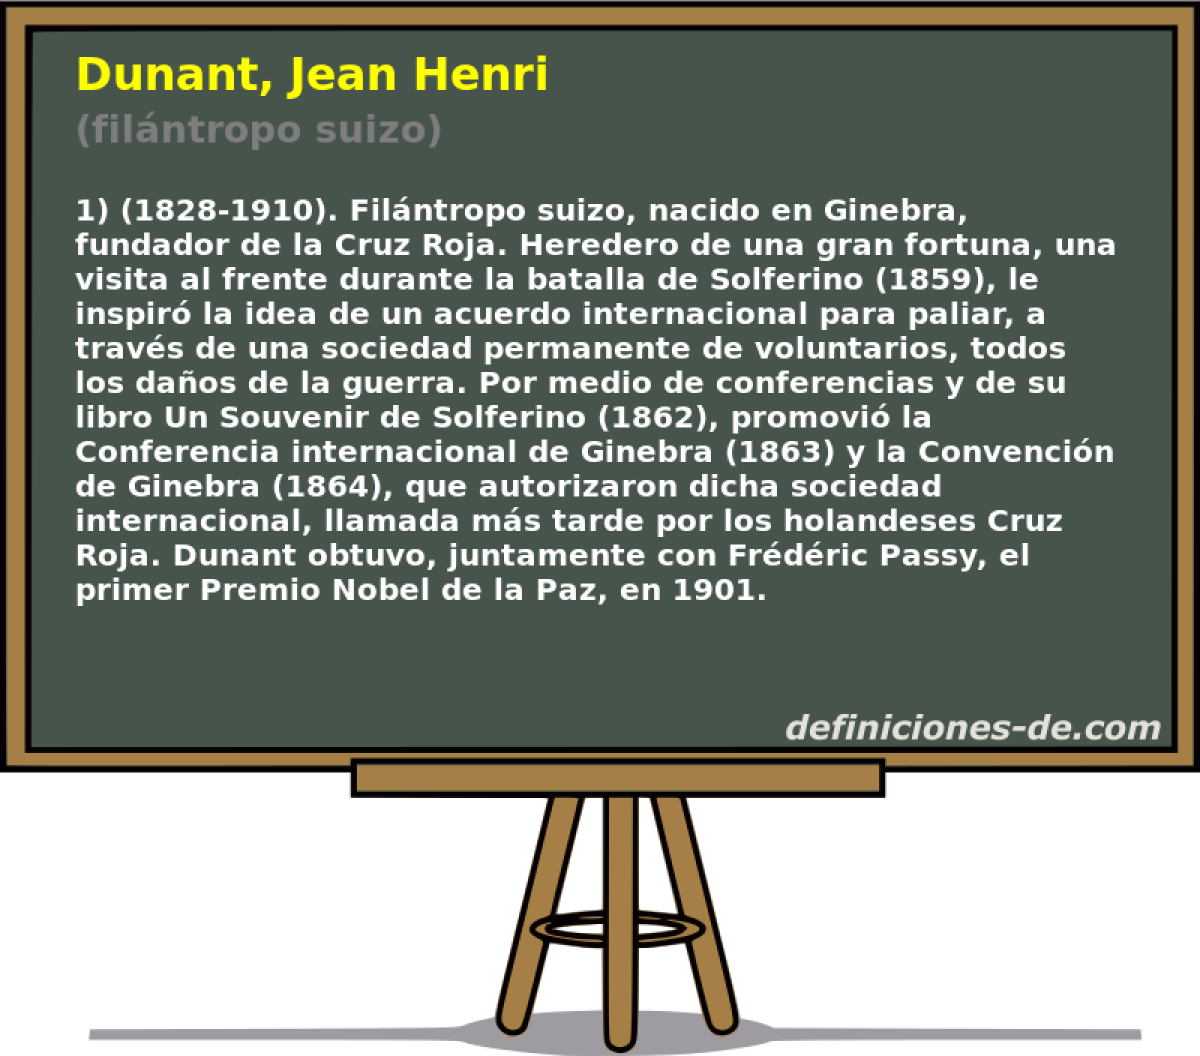 Dunant, Jean Henri (filntropo suizo)